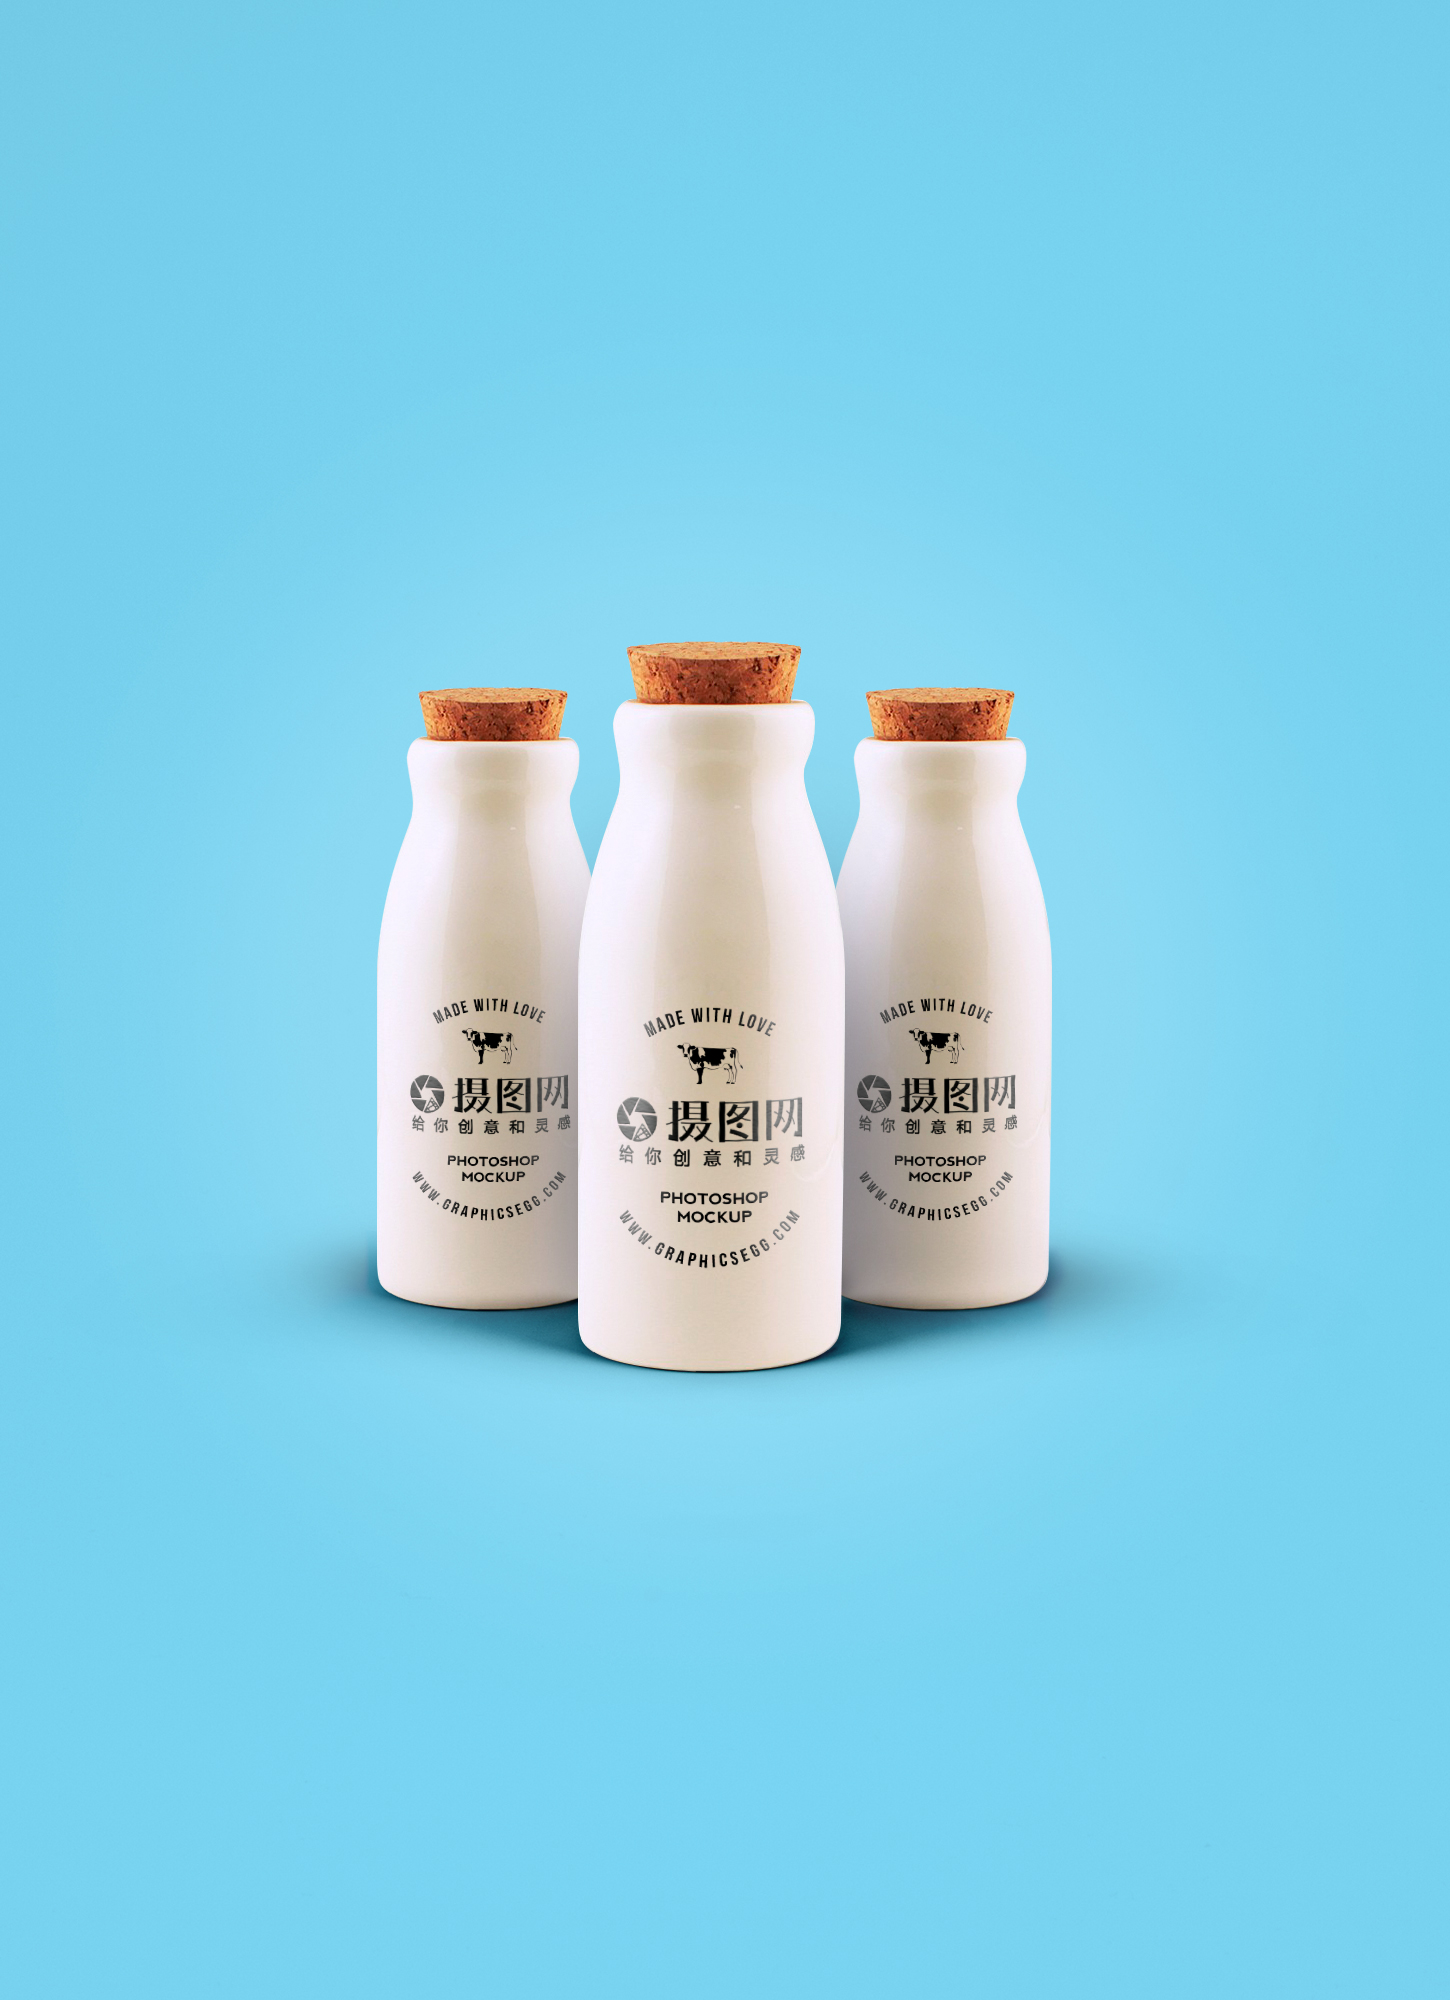 Yogurt Packaging Design Template Image Picture Free Download 400832529 Lovepik Com